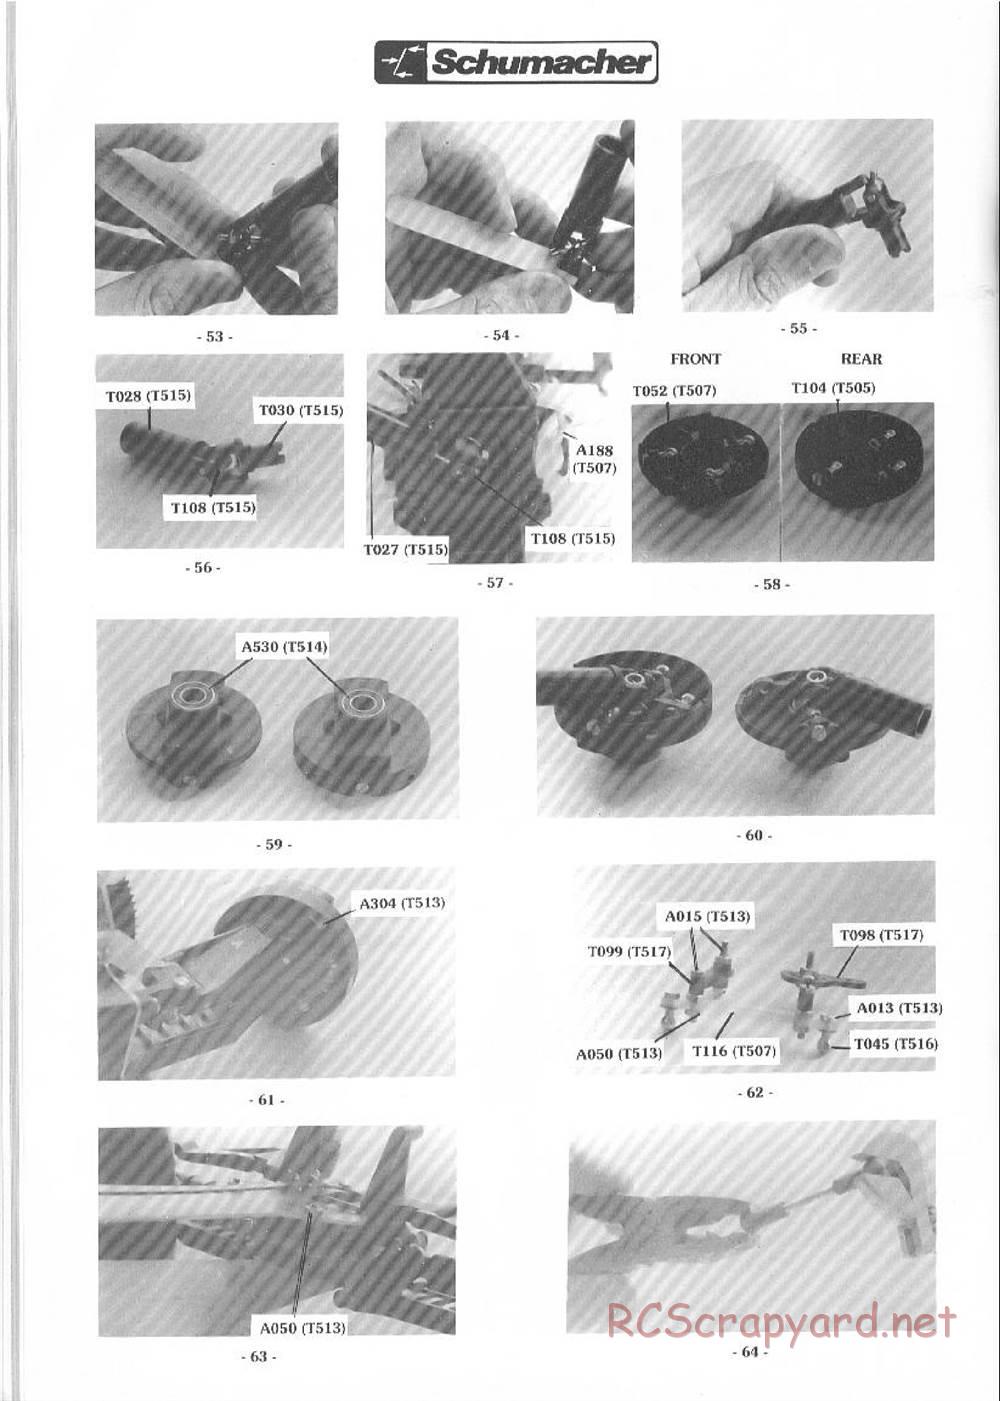 Schumacher - Cat SWB - Manual - Page 11